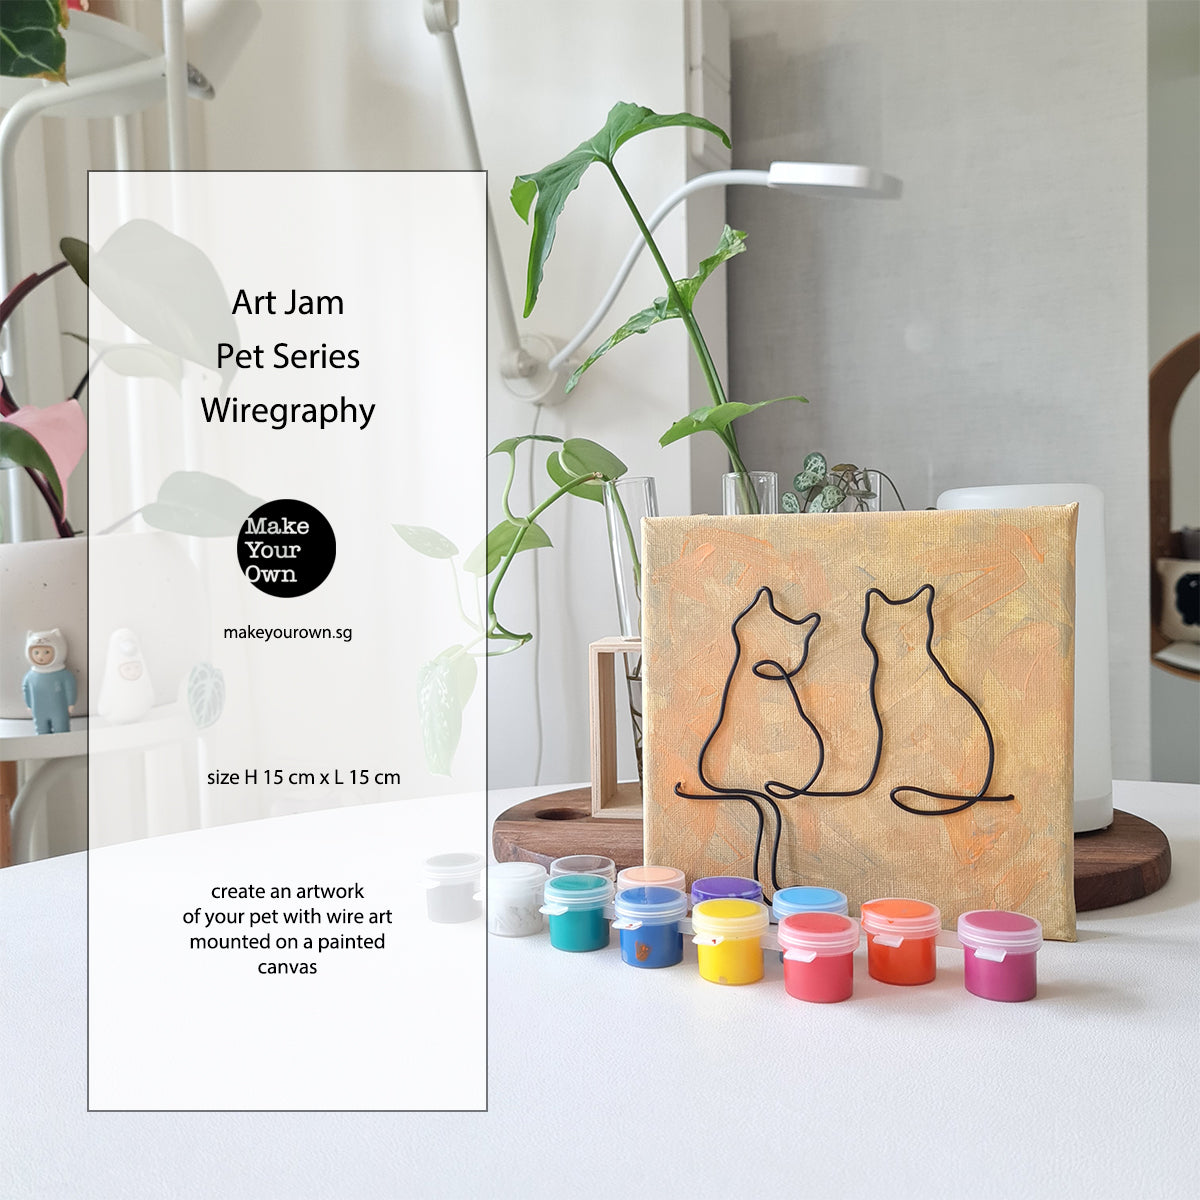 Corporate Art Jam - Pet Series Wiregraphy